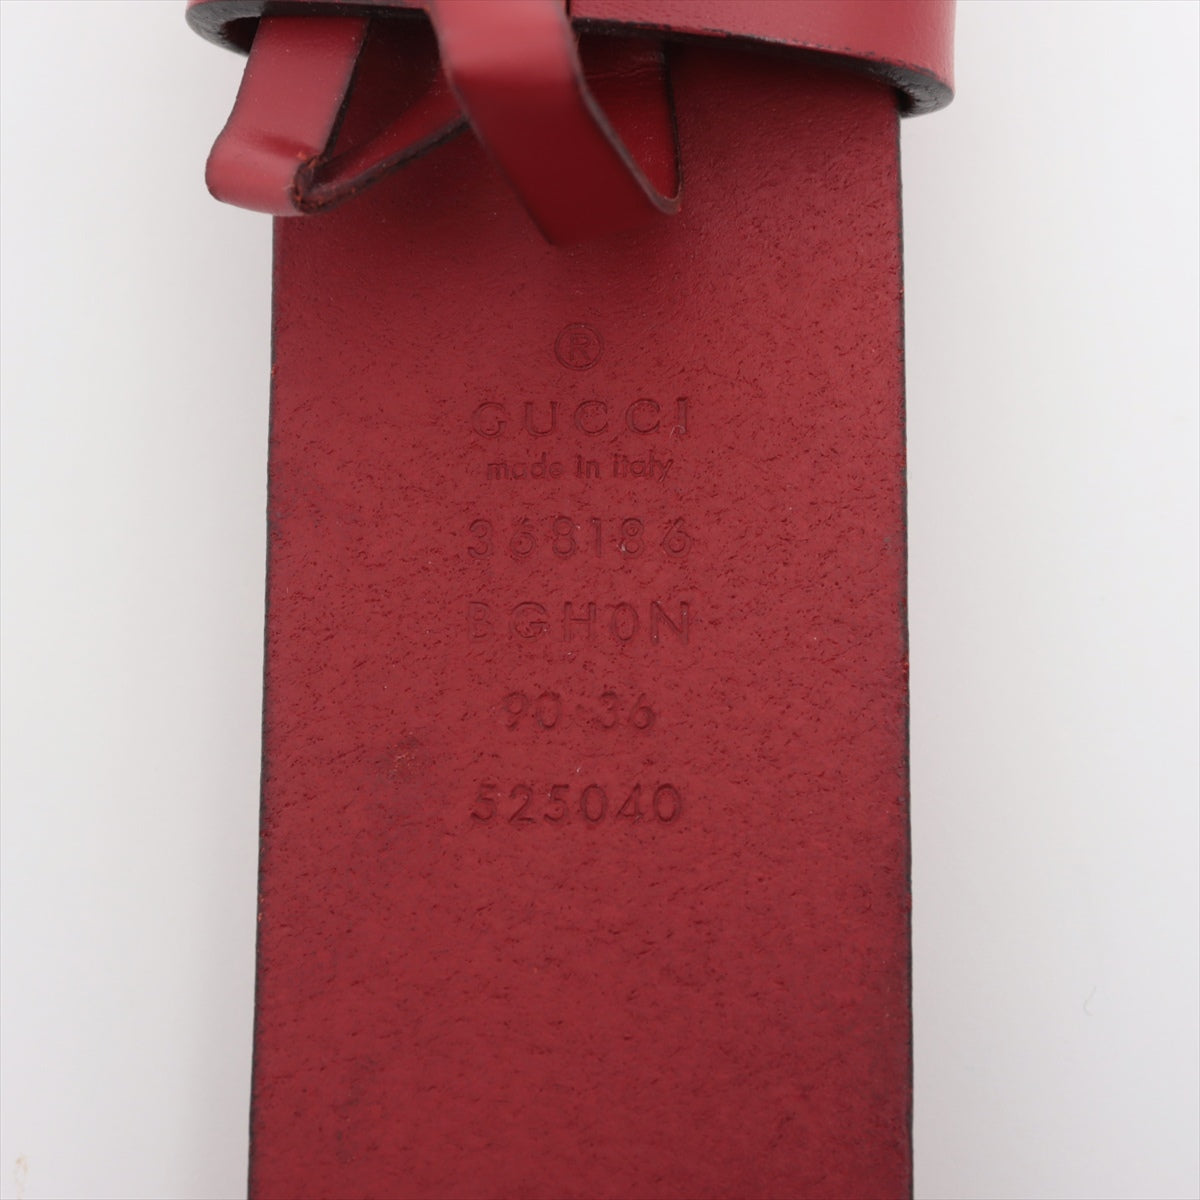 Gucci 525040 Interlocking G Belt 90 Leather Red